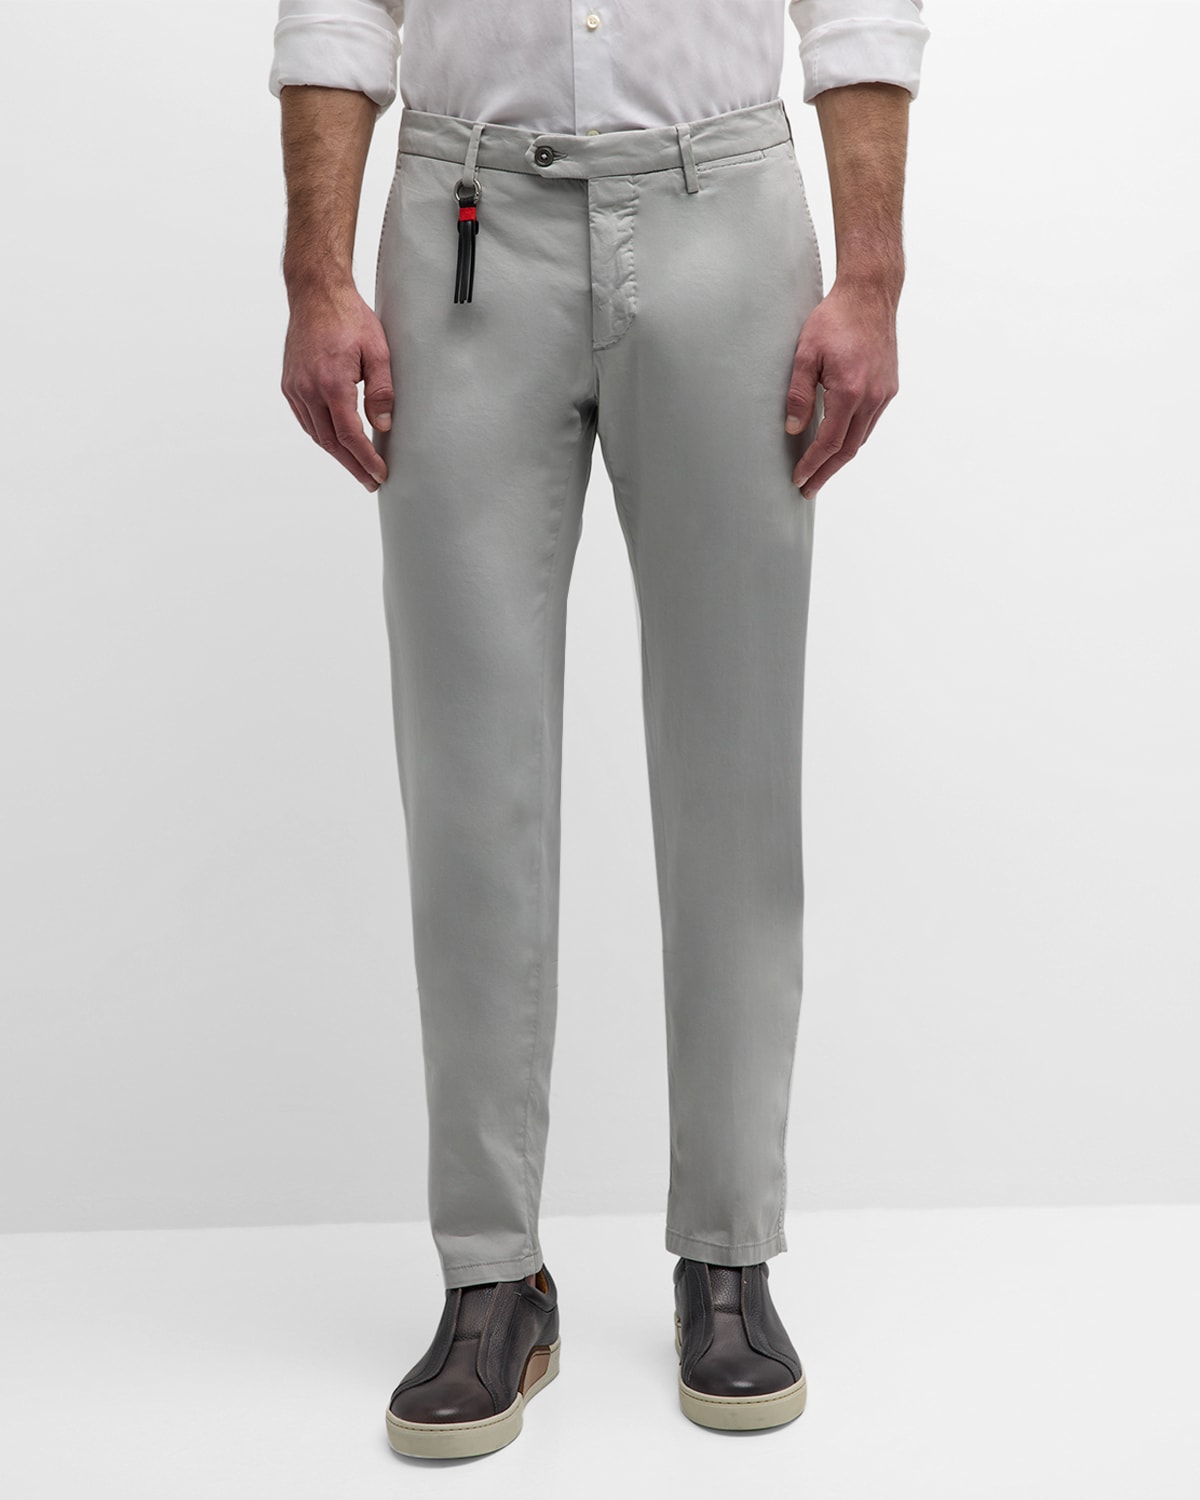 Men's Saia Superlight Semi-Dress Chino Pants